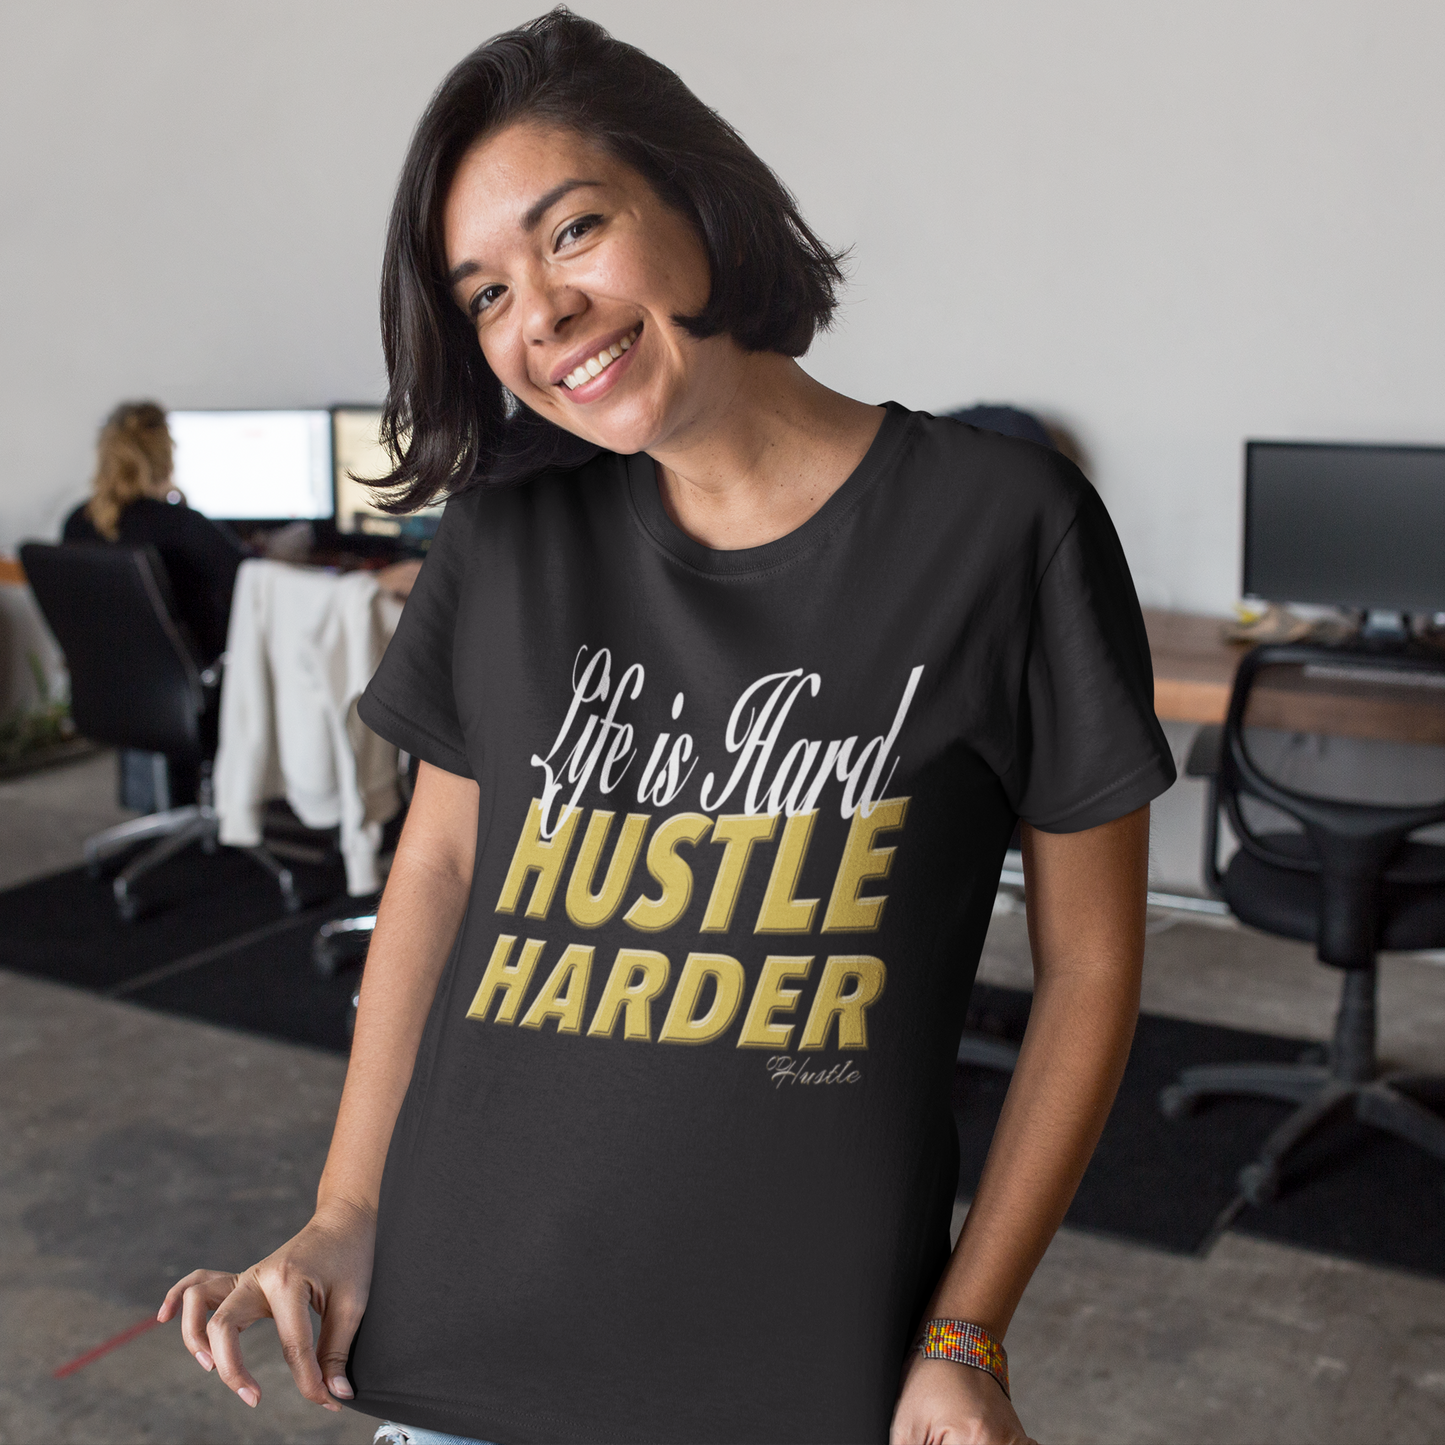 OD Hustle " Life is Hard Hustle Harder" Short-Sleeve T-Shirt